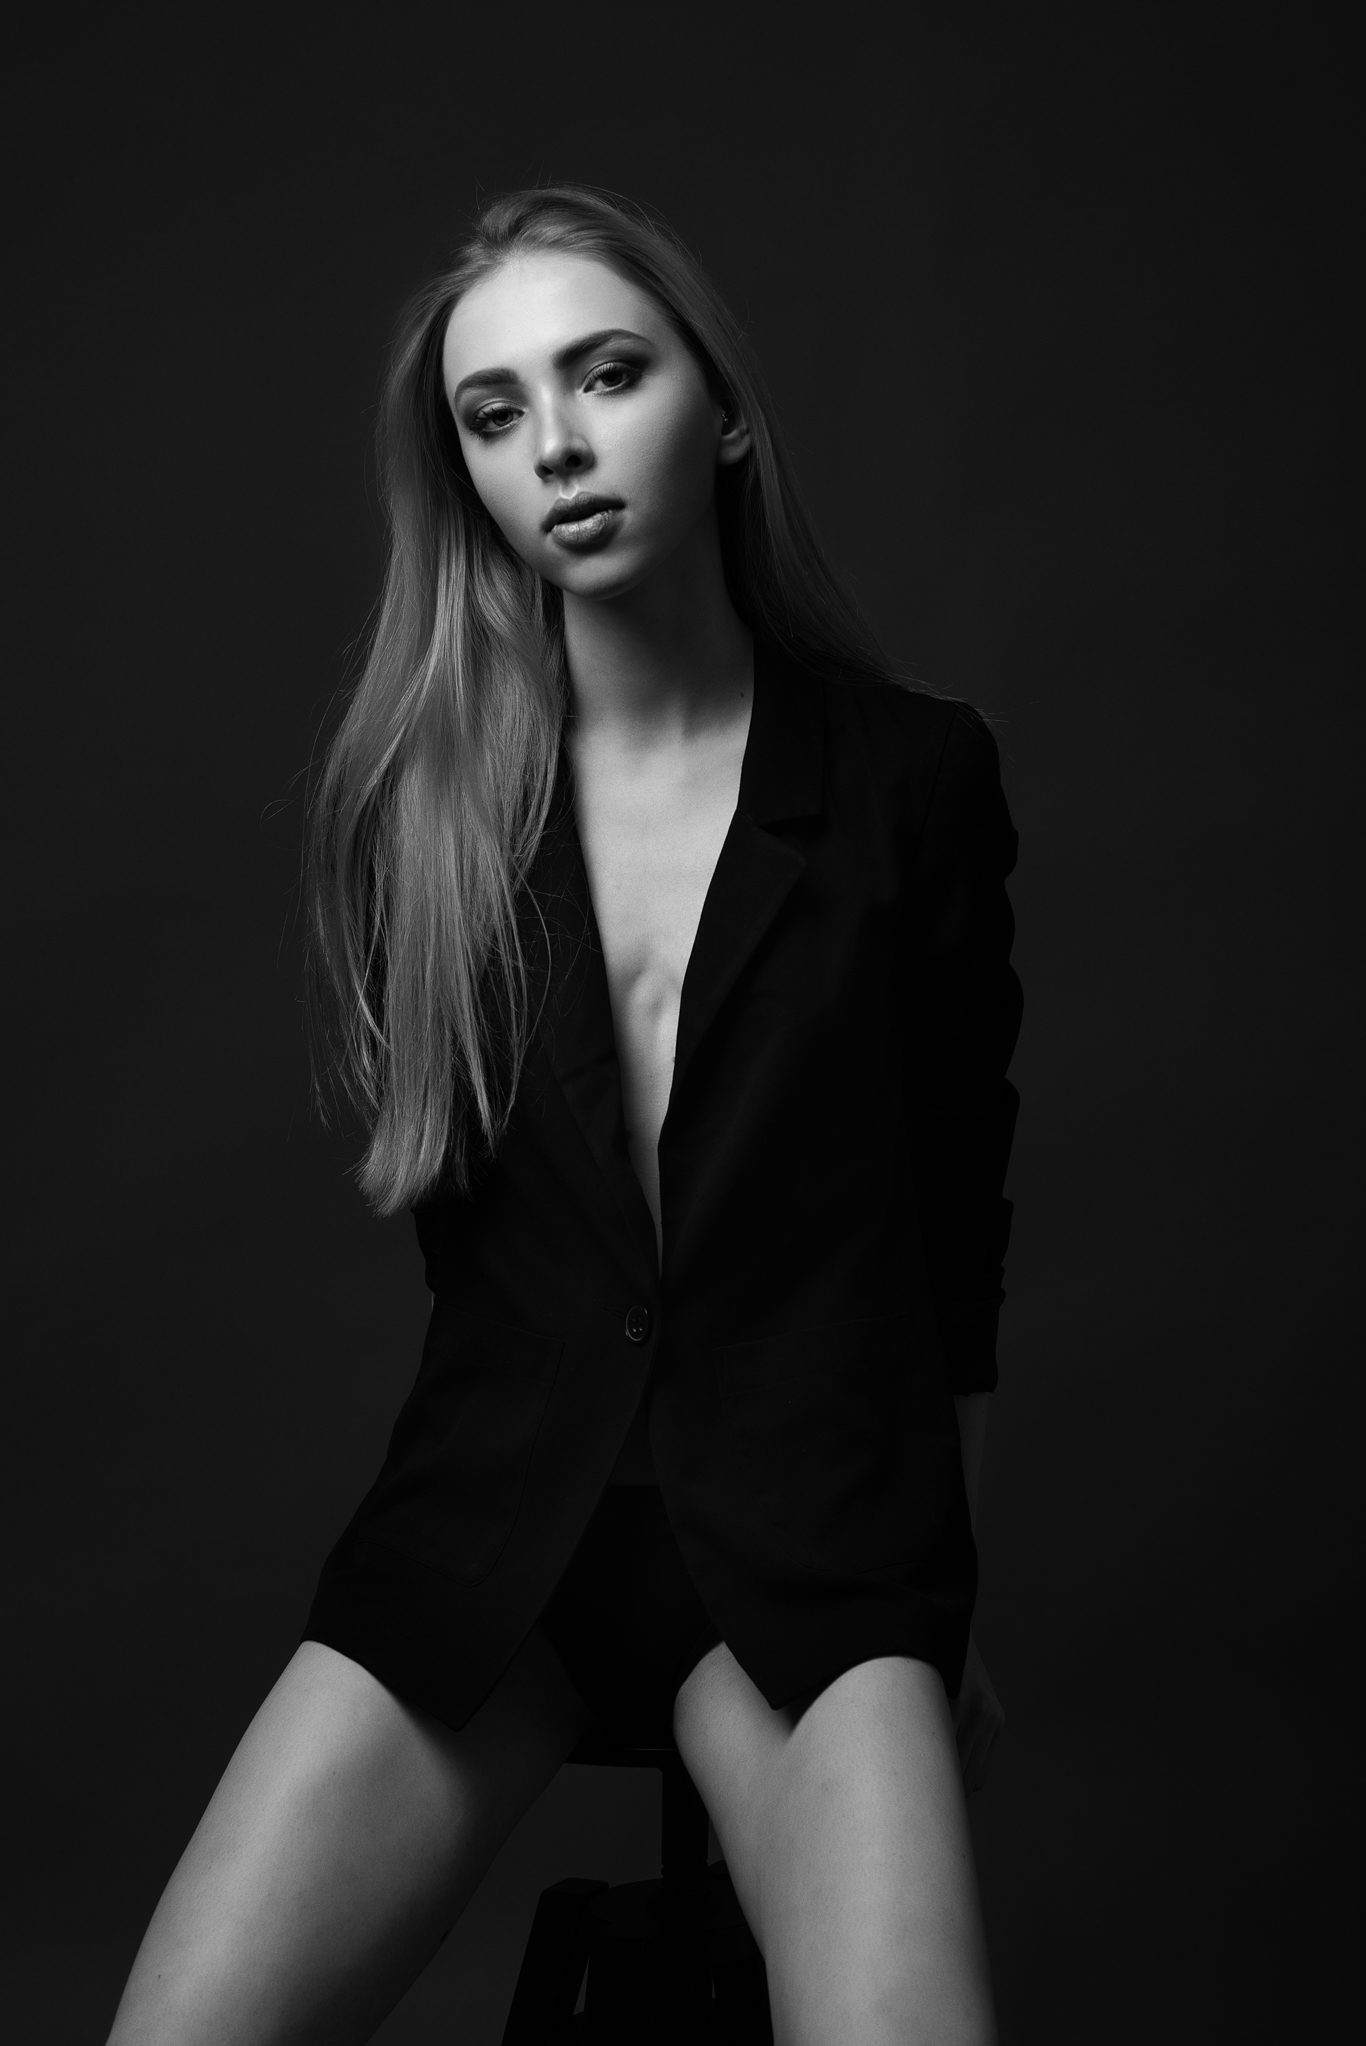 Model: Kinga Dulka | MUA: Emilia LipiÅska | Agency: Neva Models | shoot at My Day | arturmadej.com | | www.facebook.com/madartpictures